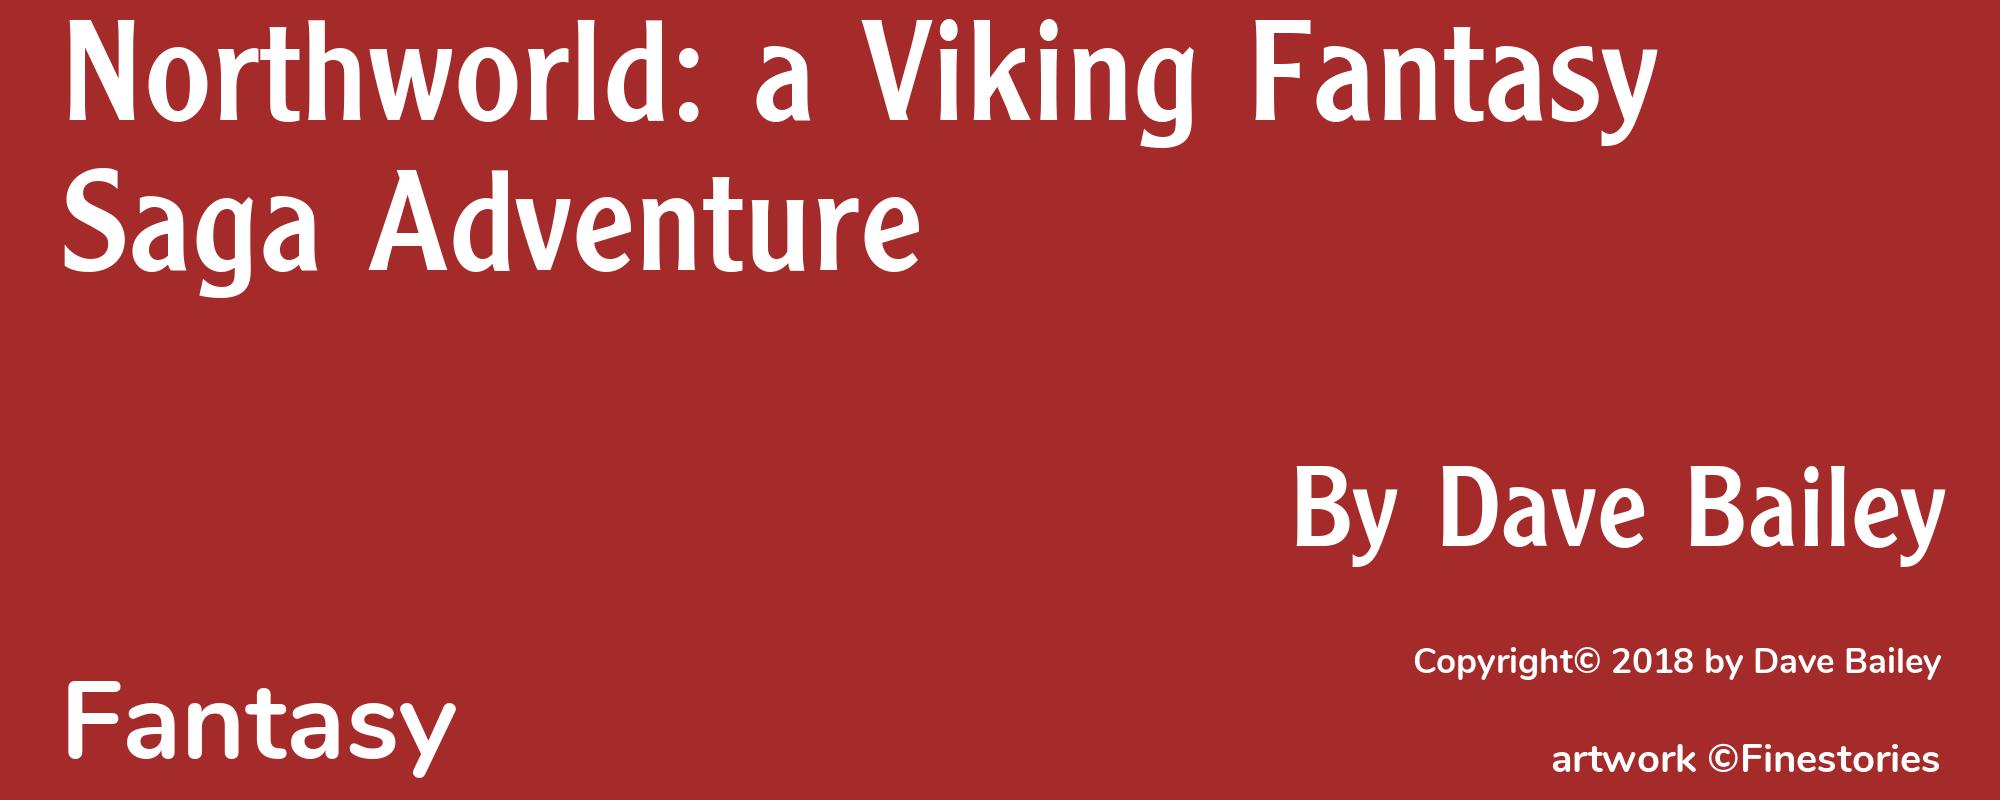 Northworld: a Viking Fantasy Saga Adventure - Cover